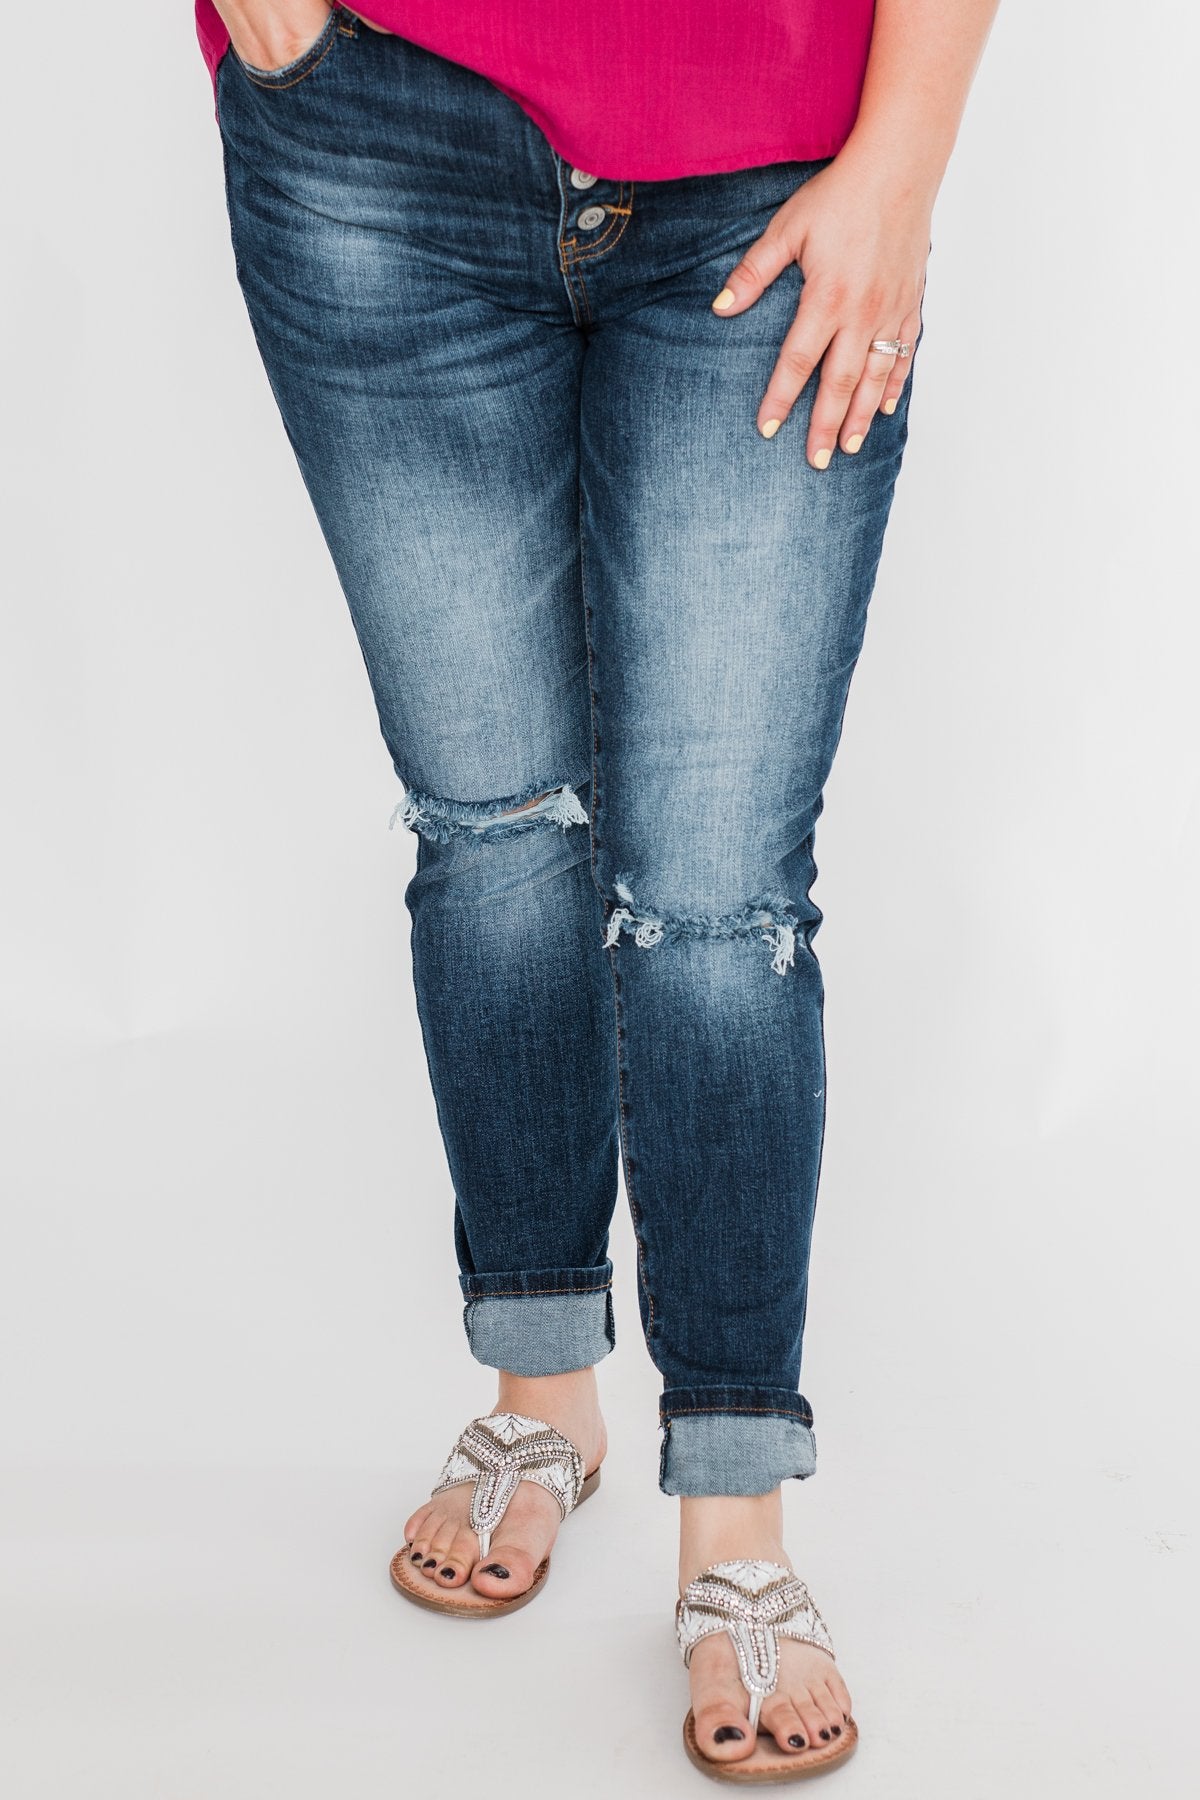 C'est Toi Distressed Skinny Jeans- Bridget Wash